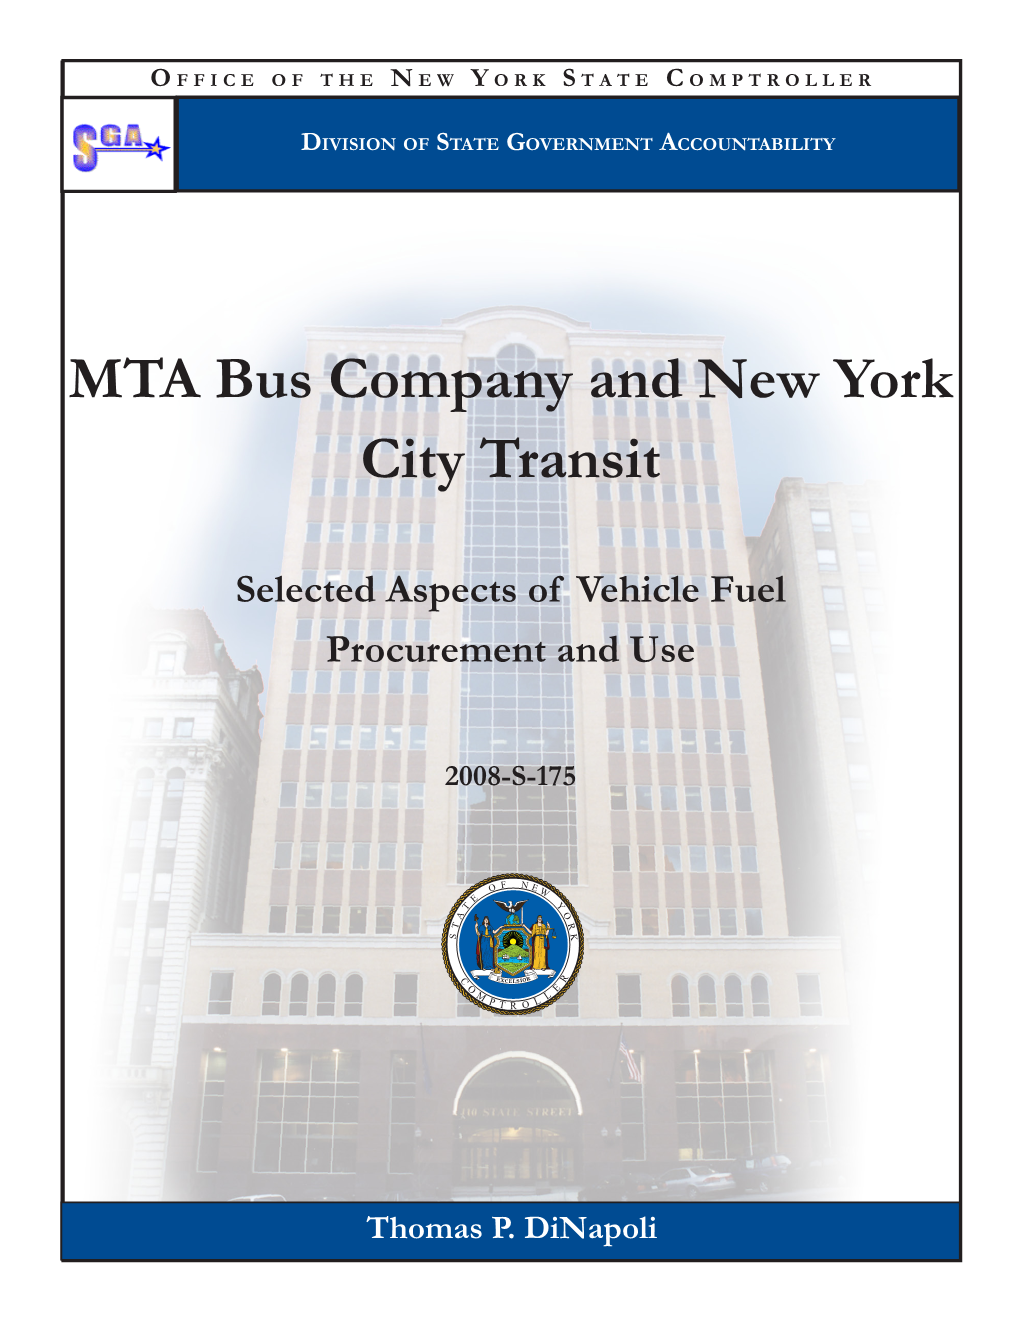 MTA Bus Company and New York City Transit